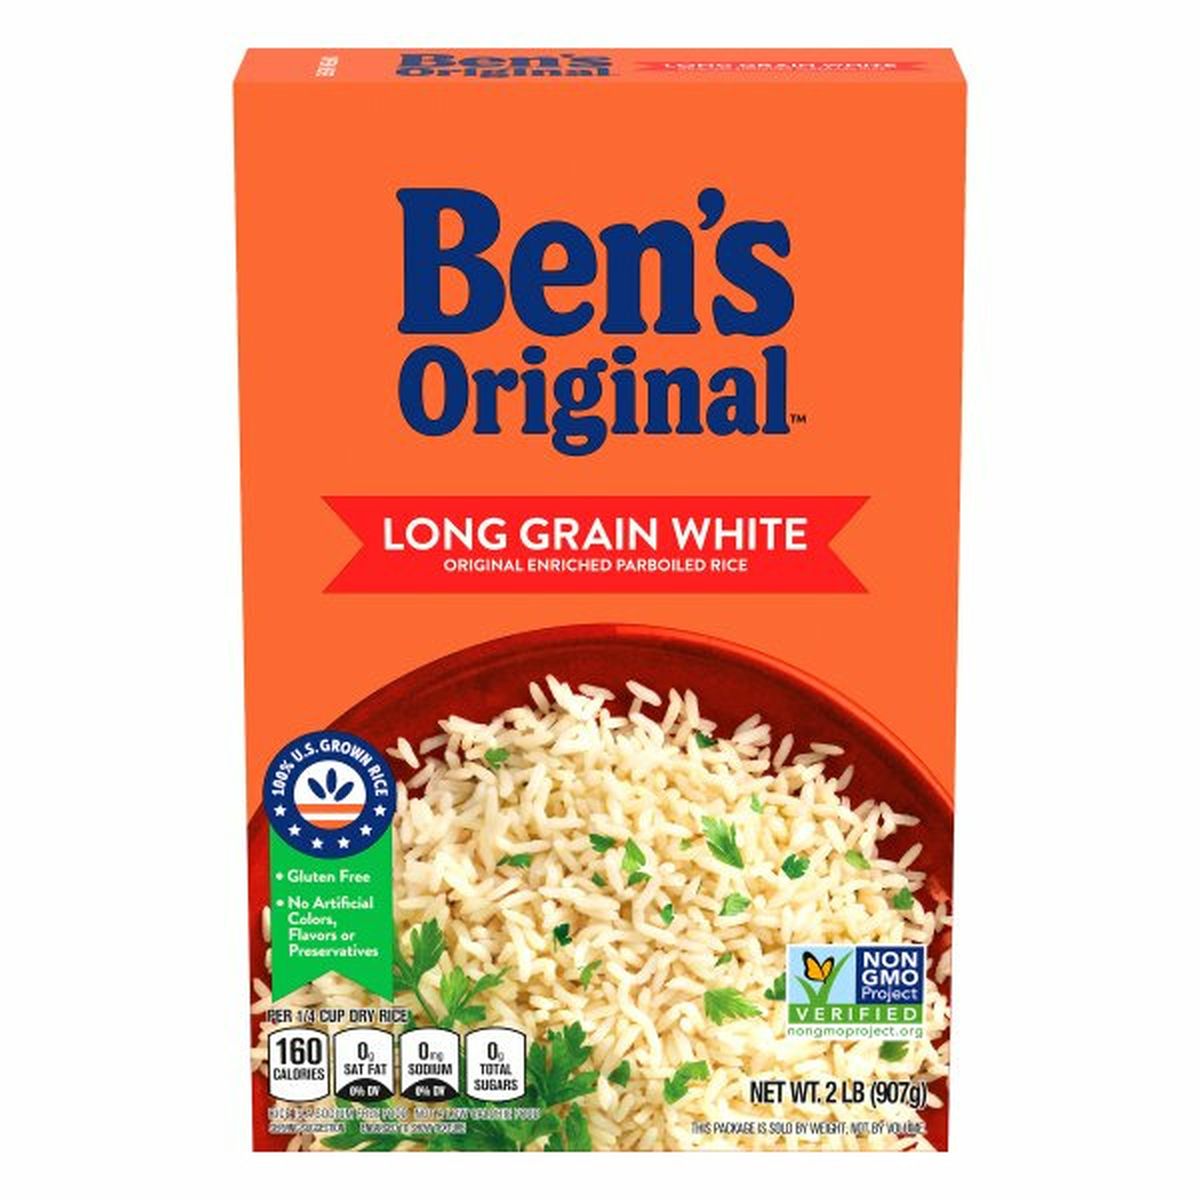 Calories in Ben's Original Rice, Long Grain White